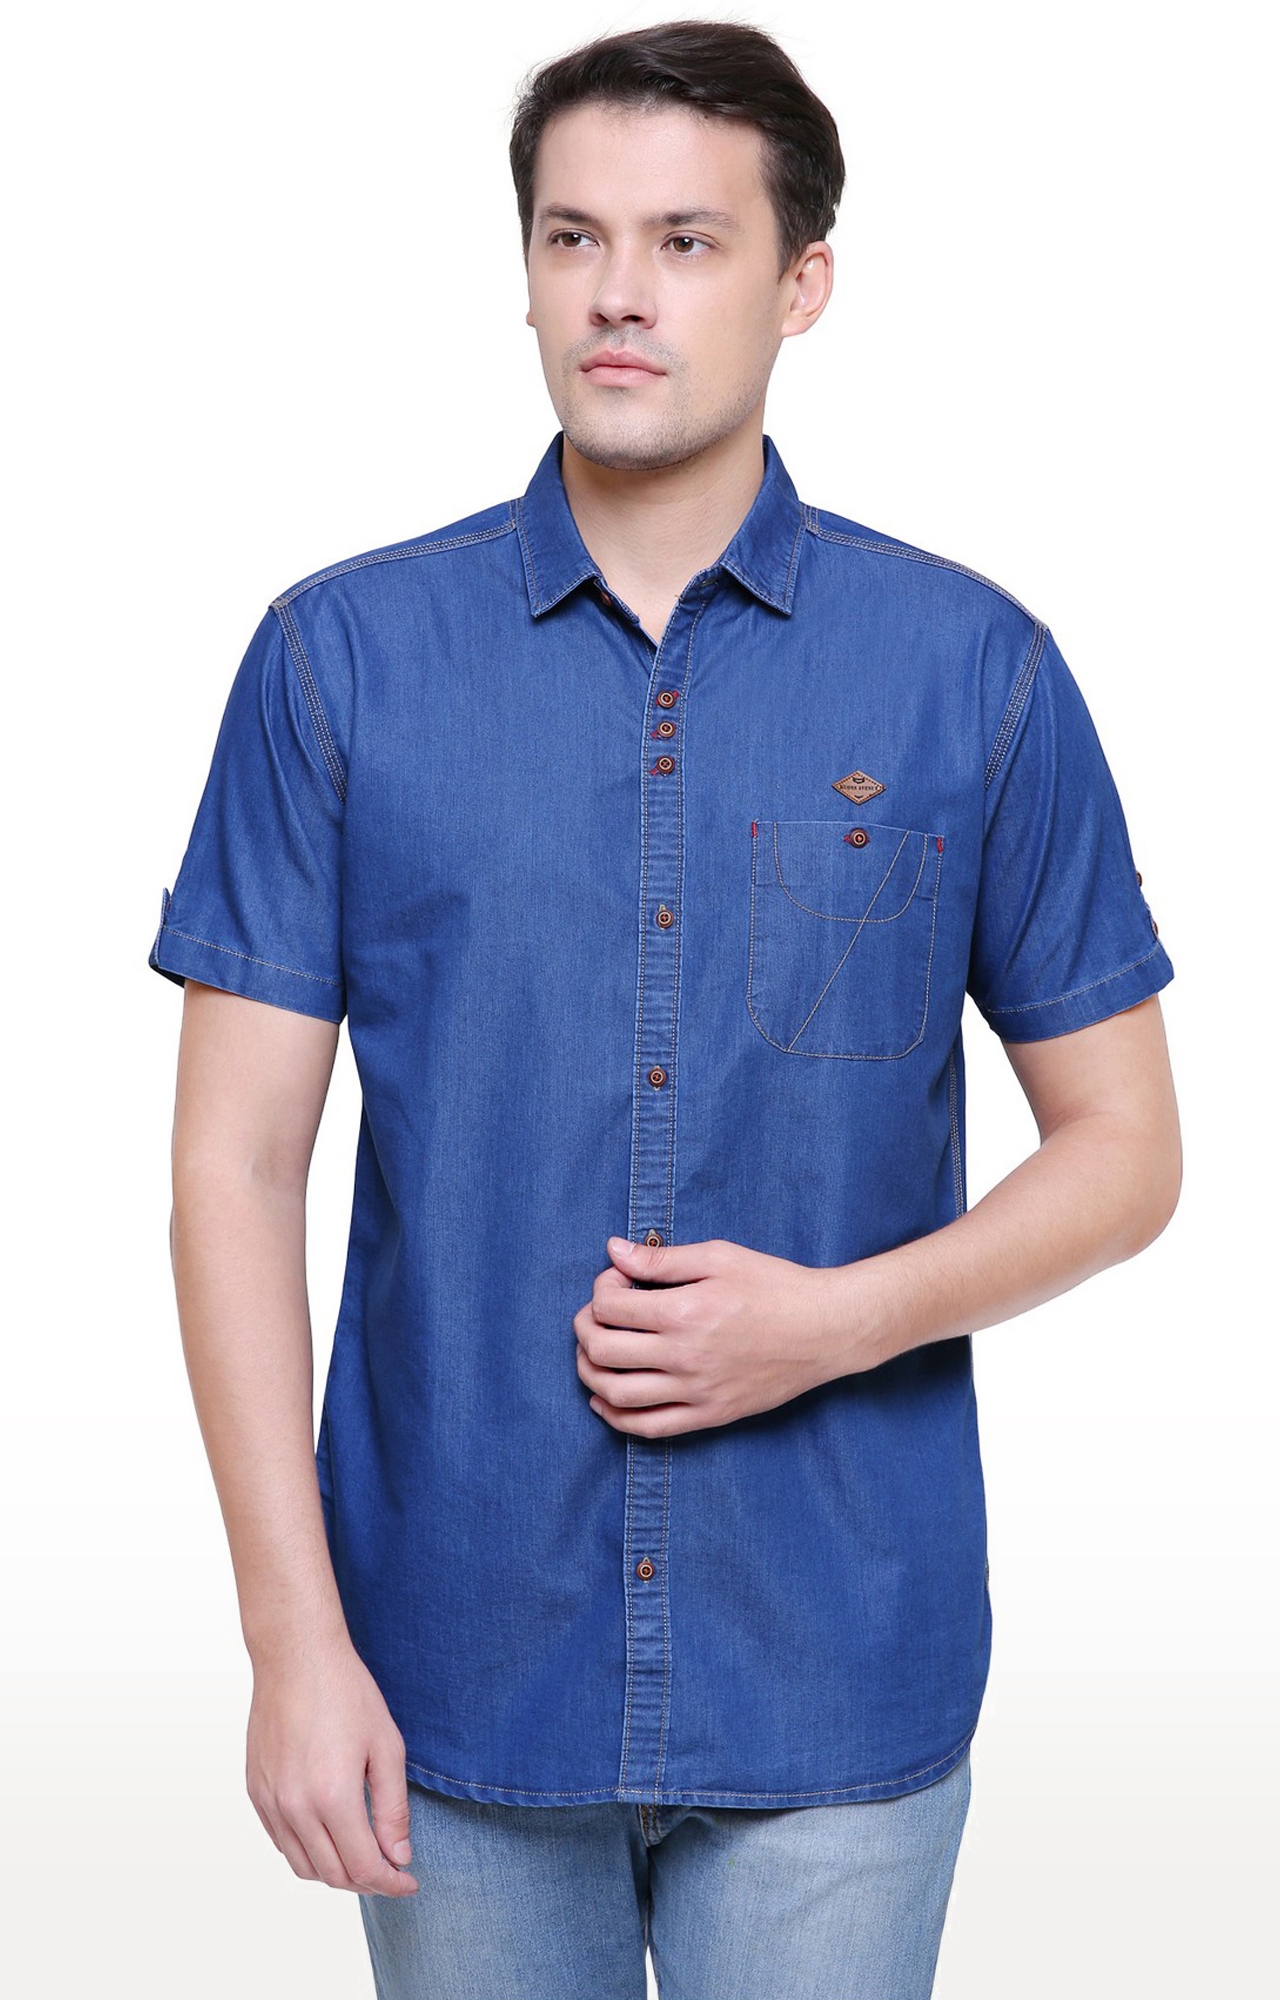 Kuons Avenue Men's True Blue Half Sleeve Denim Shirt